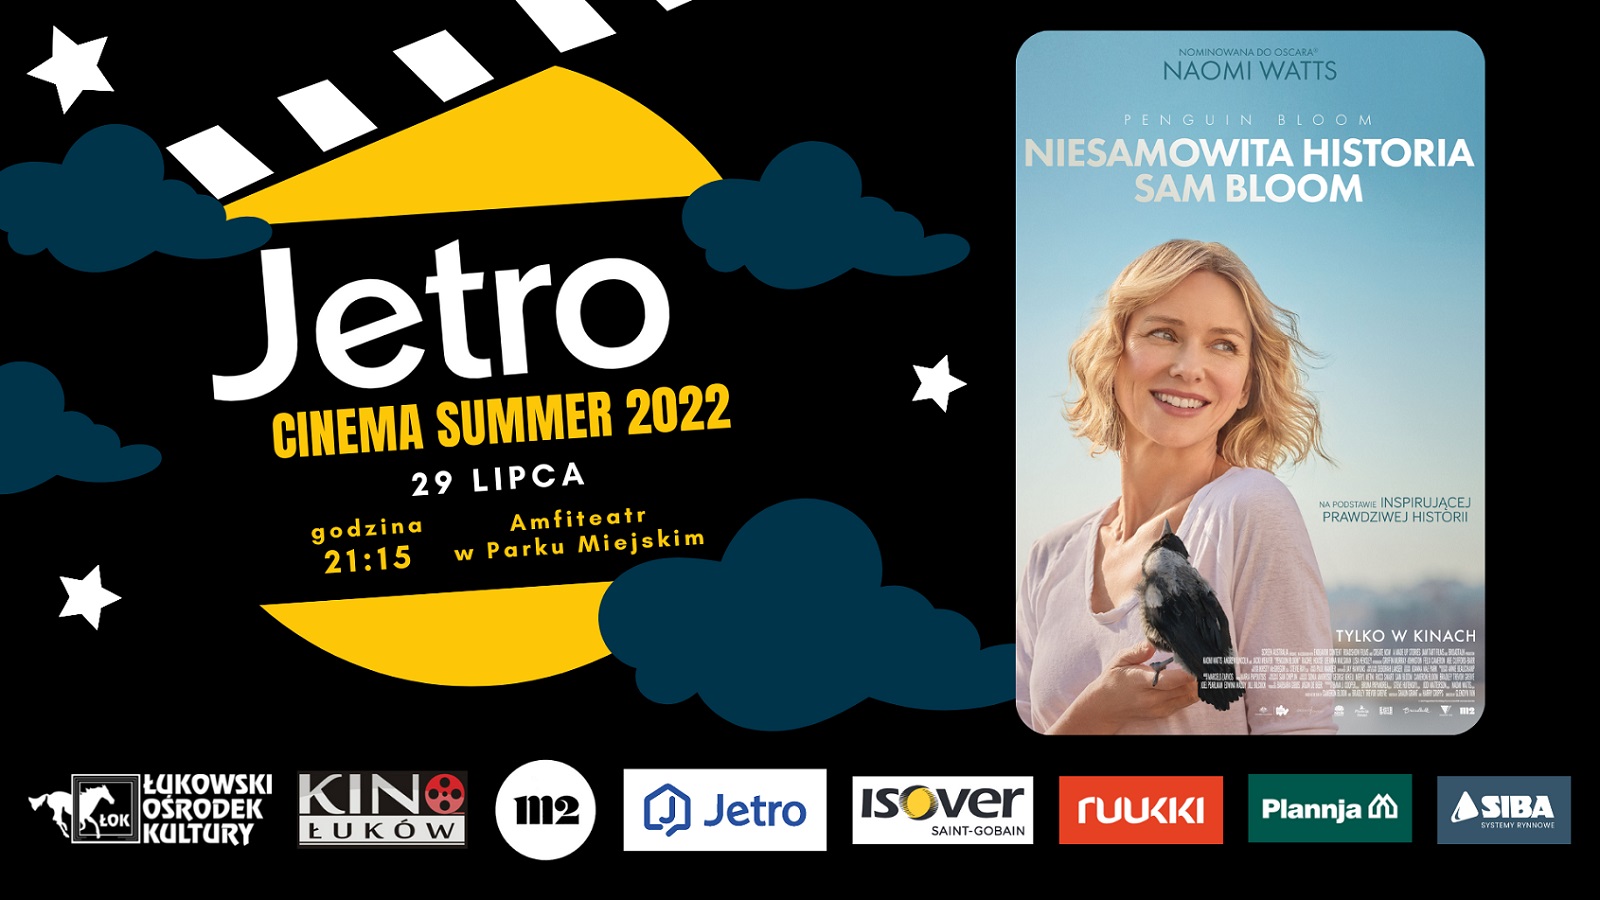 Jetro Cinema Summer: "Niesamowita historia Sam Bloom" 